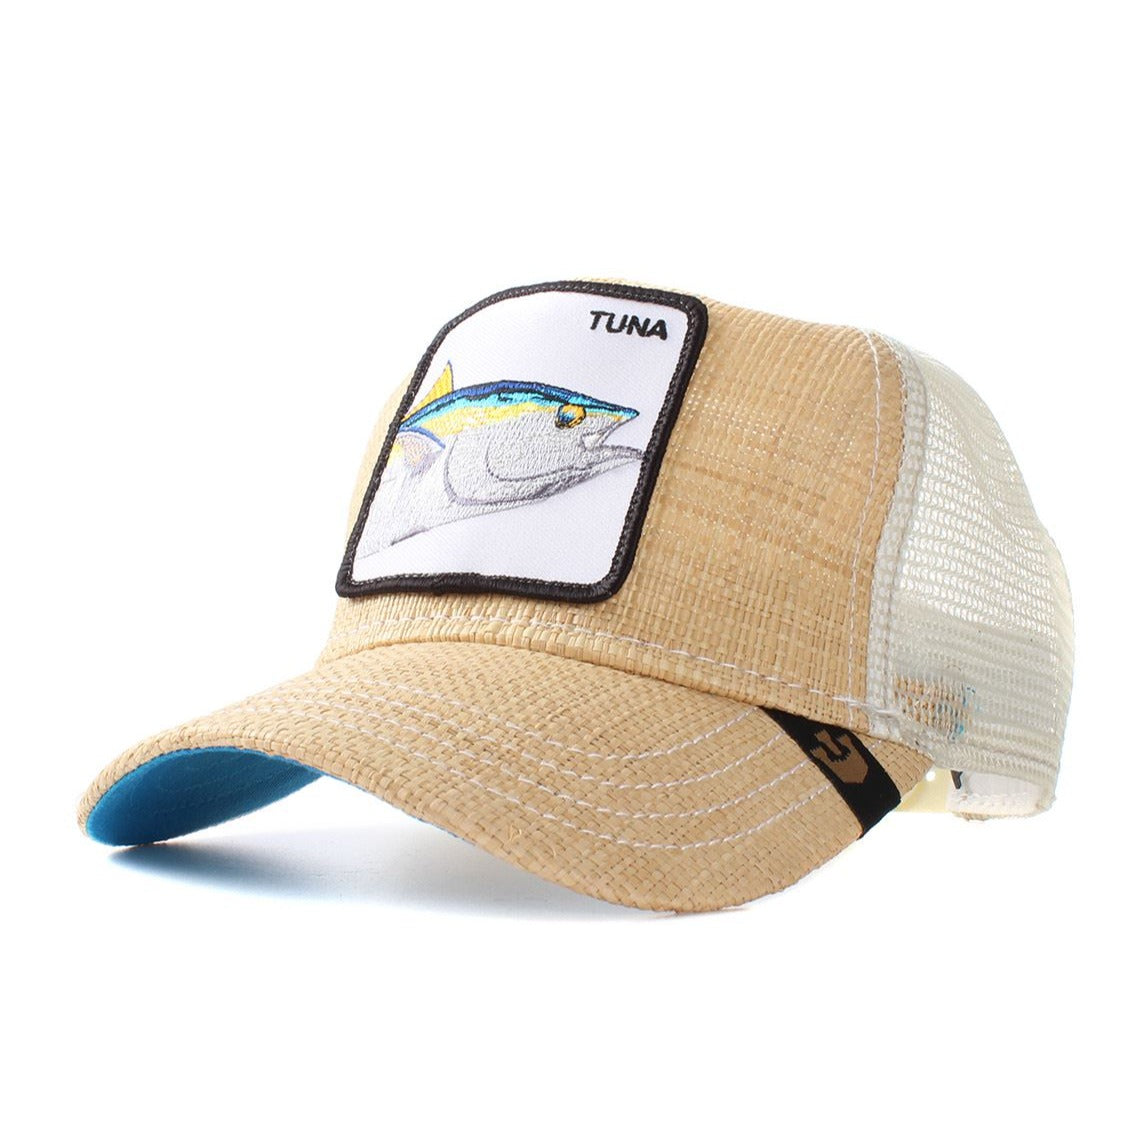 Goorin Bros Tuna Natural - כובע גורין טונה 